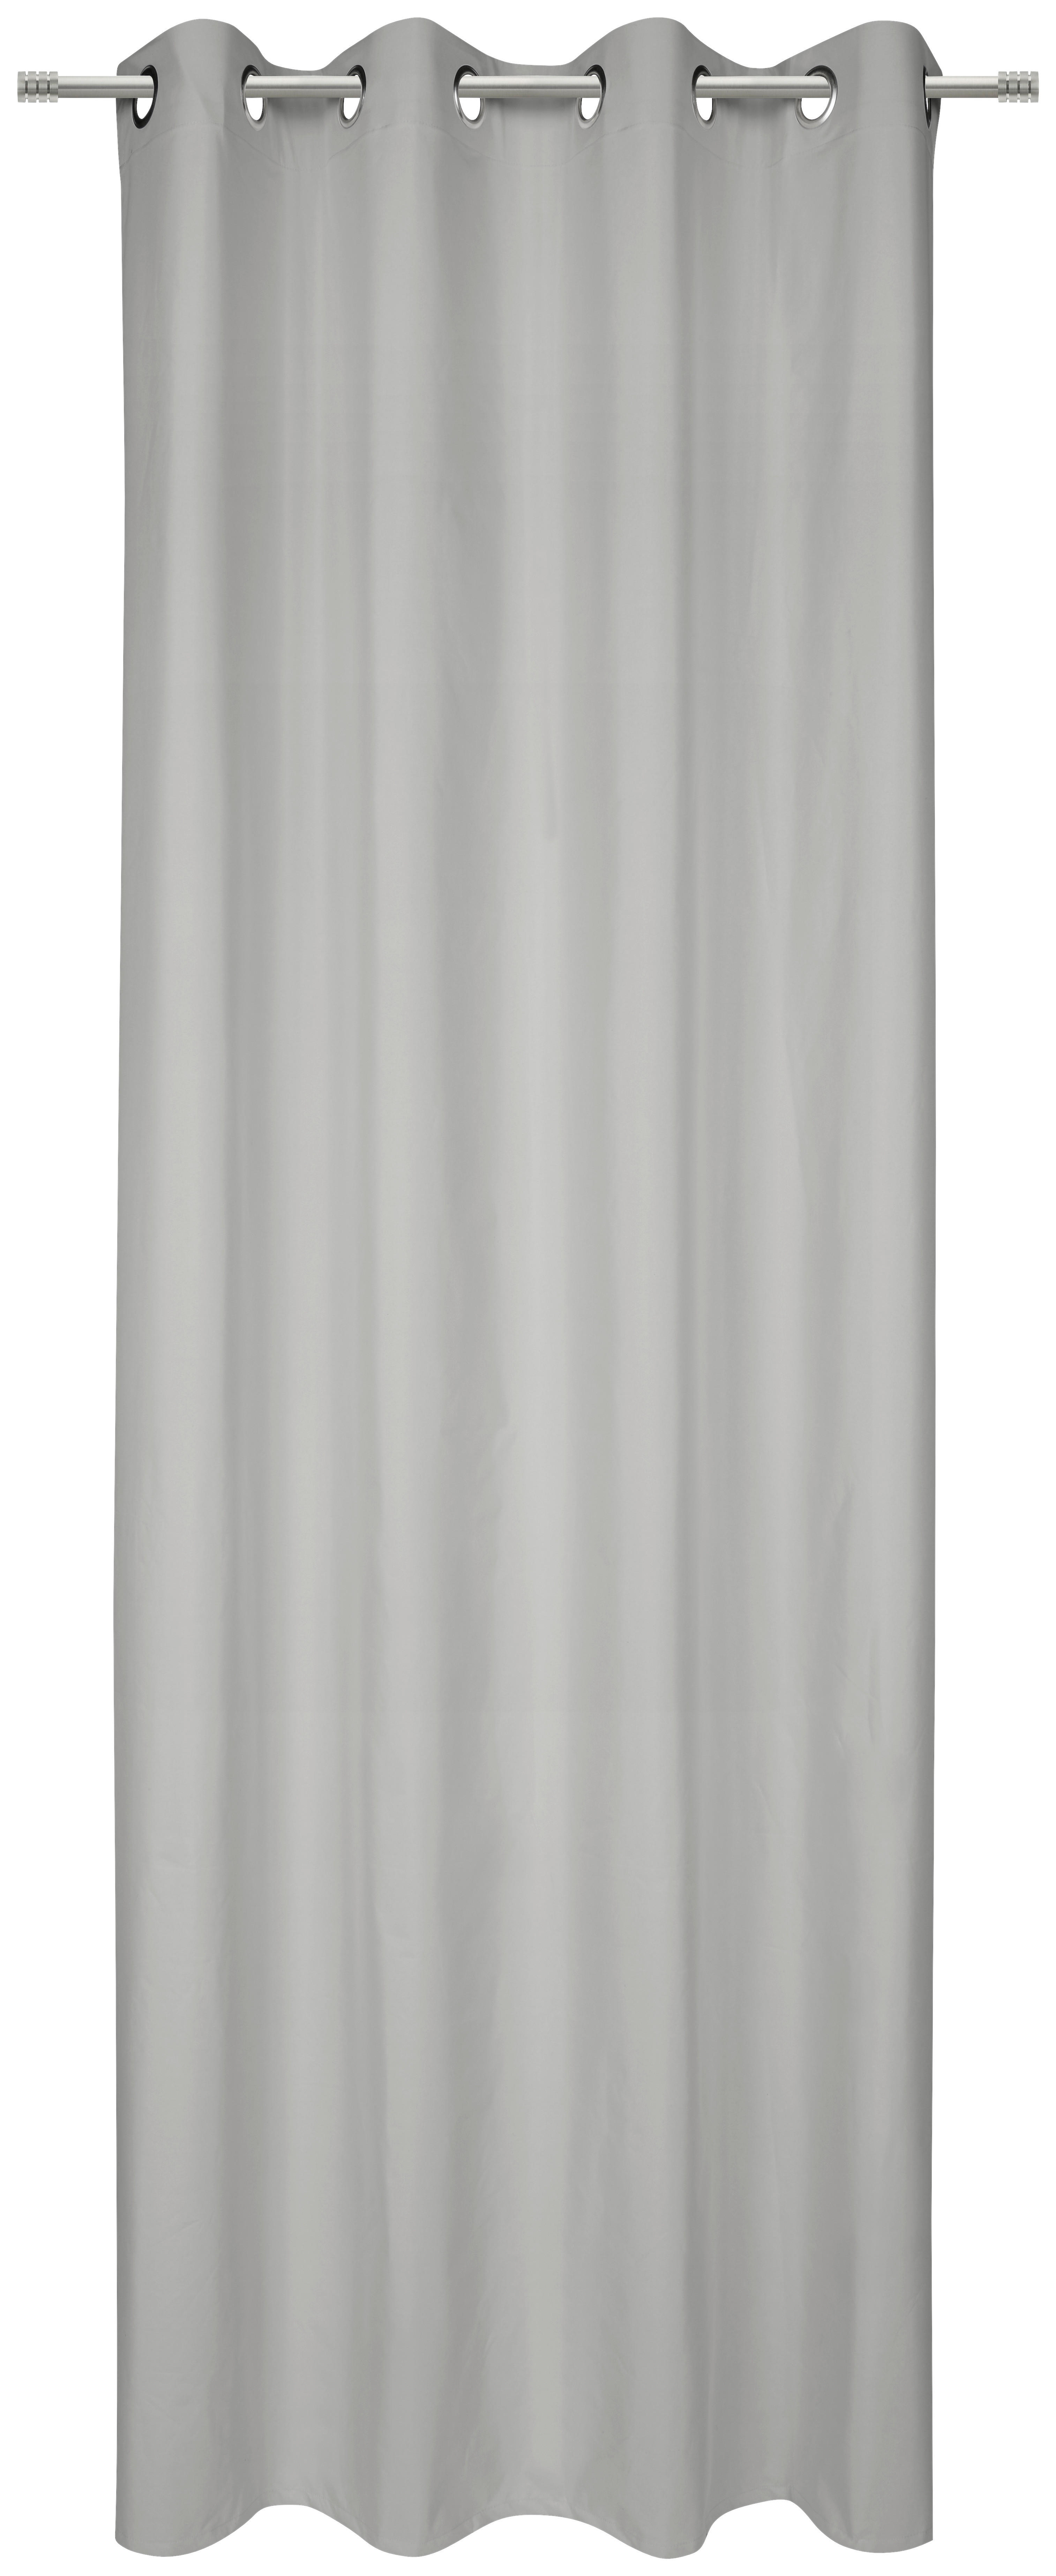 ÖSENSCHAL THERMO blickdicht 140/245 cm   - Grau, Basics, Textil (140/245cm) - Esposa